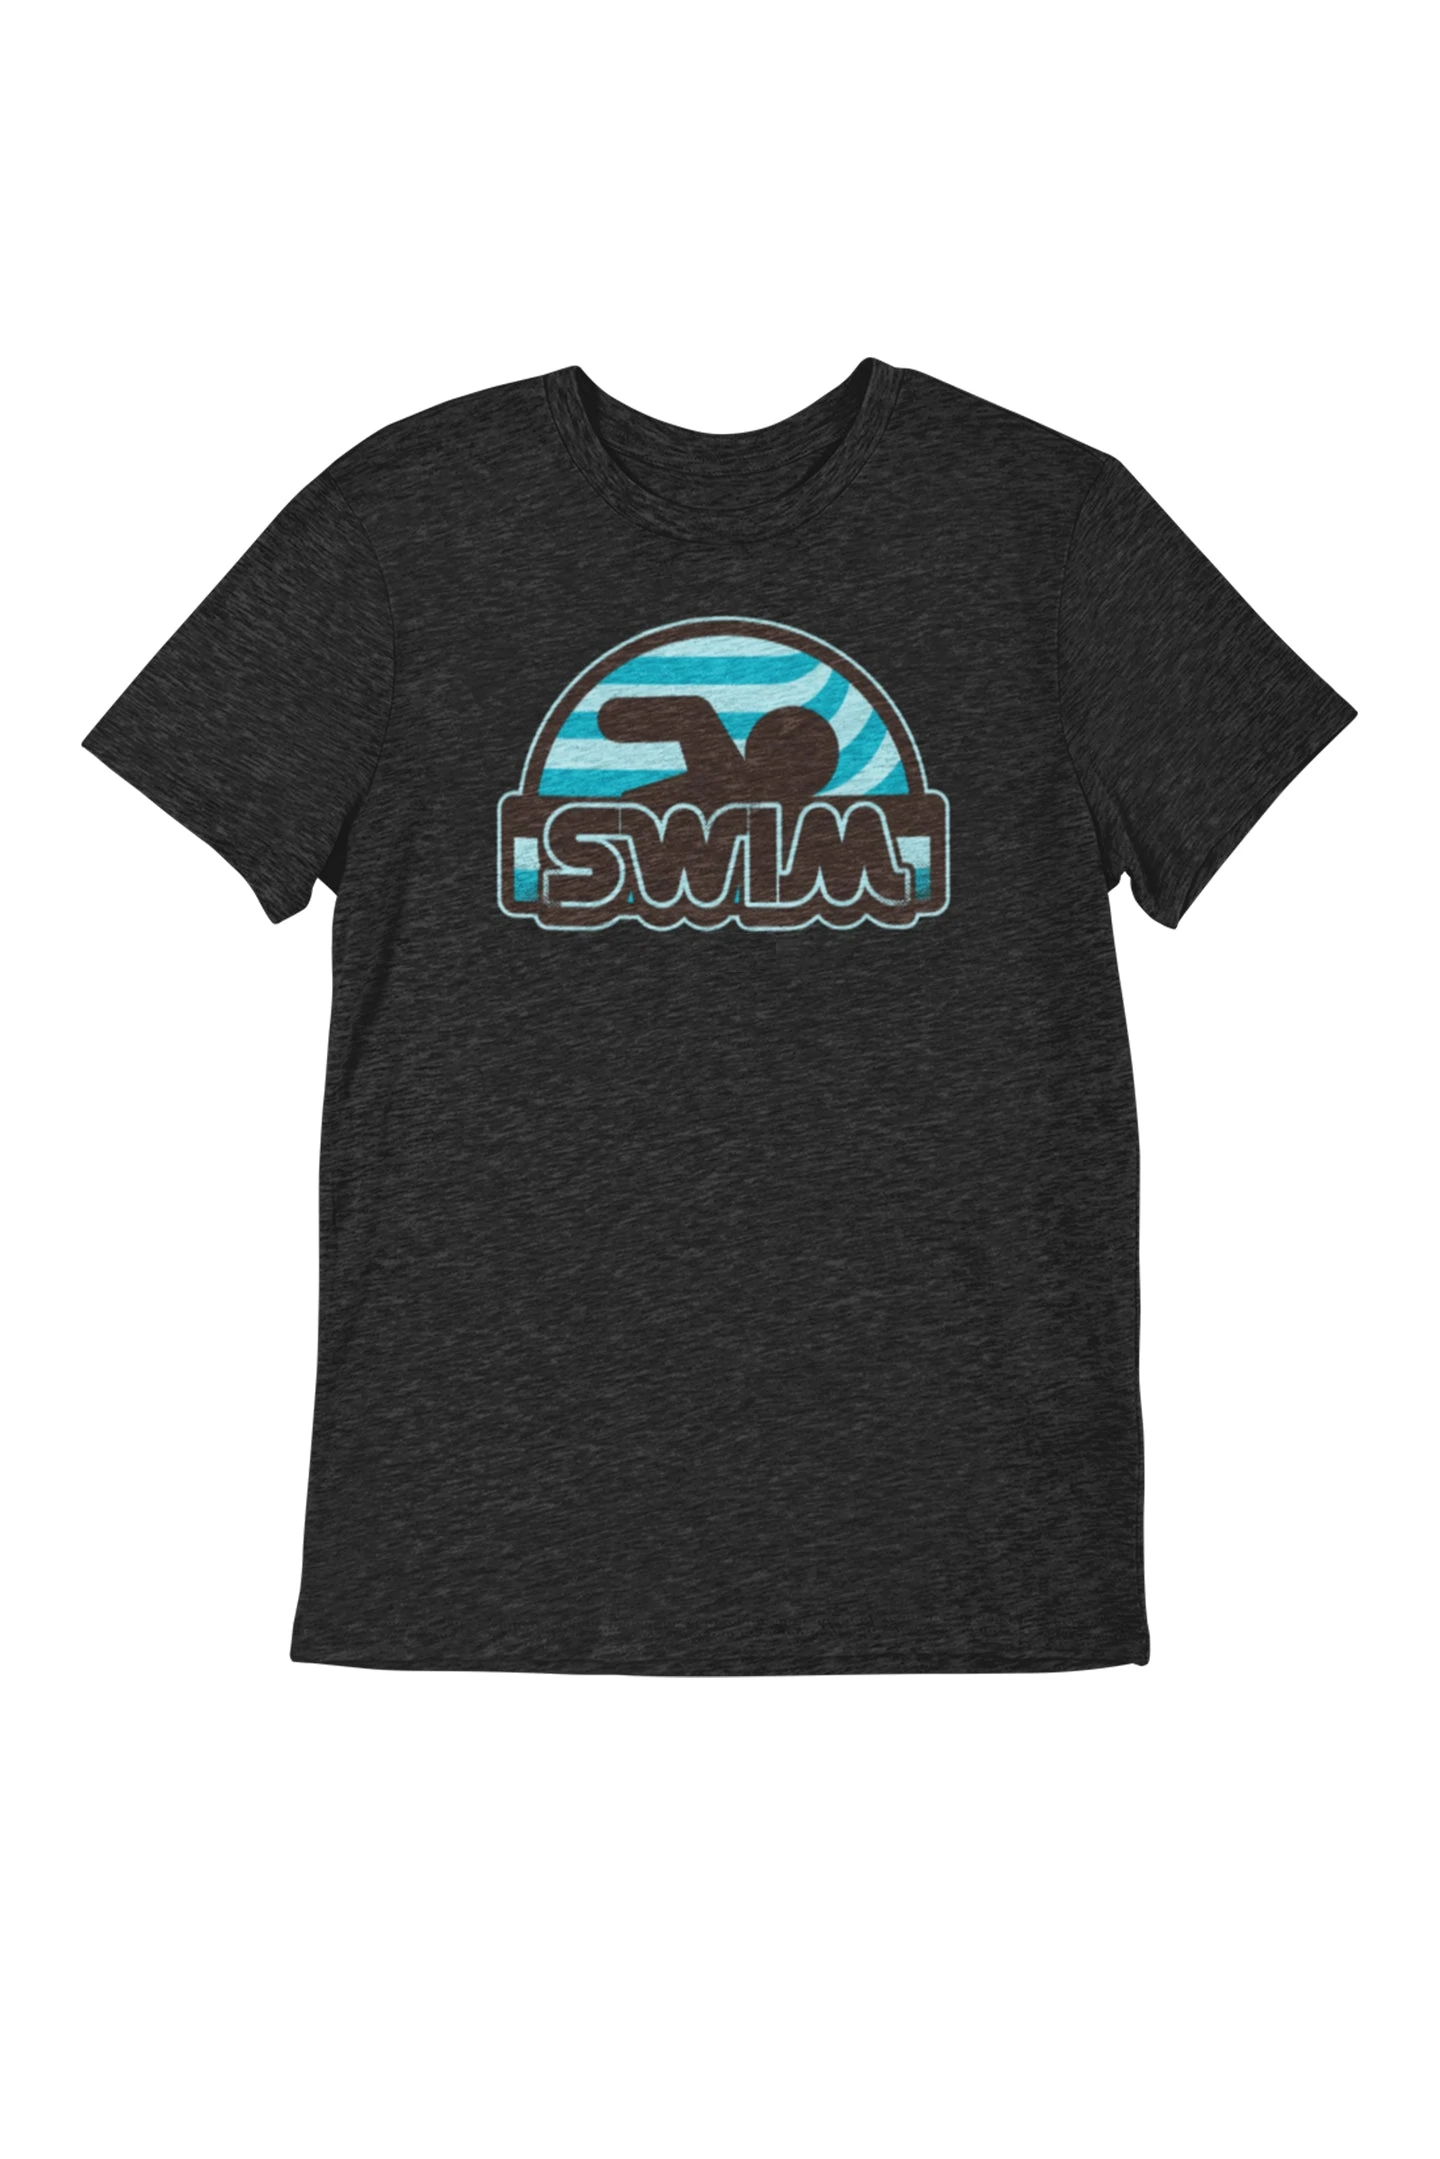 Swim - Women's